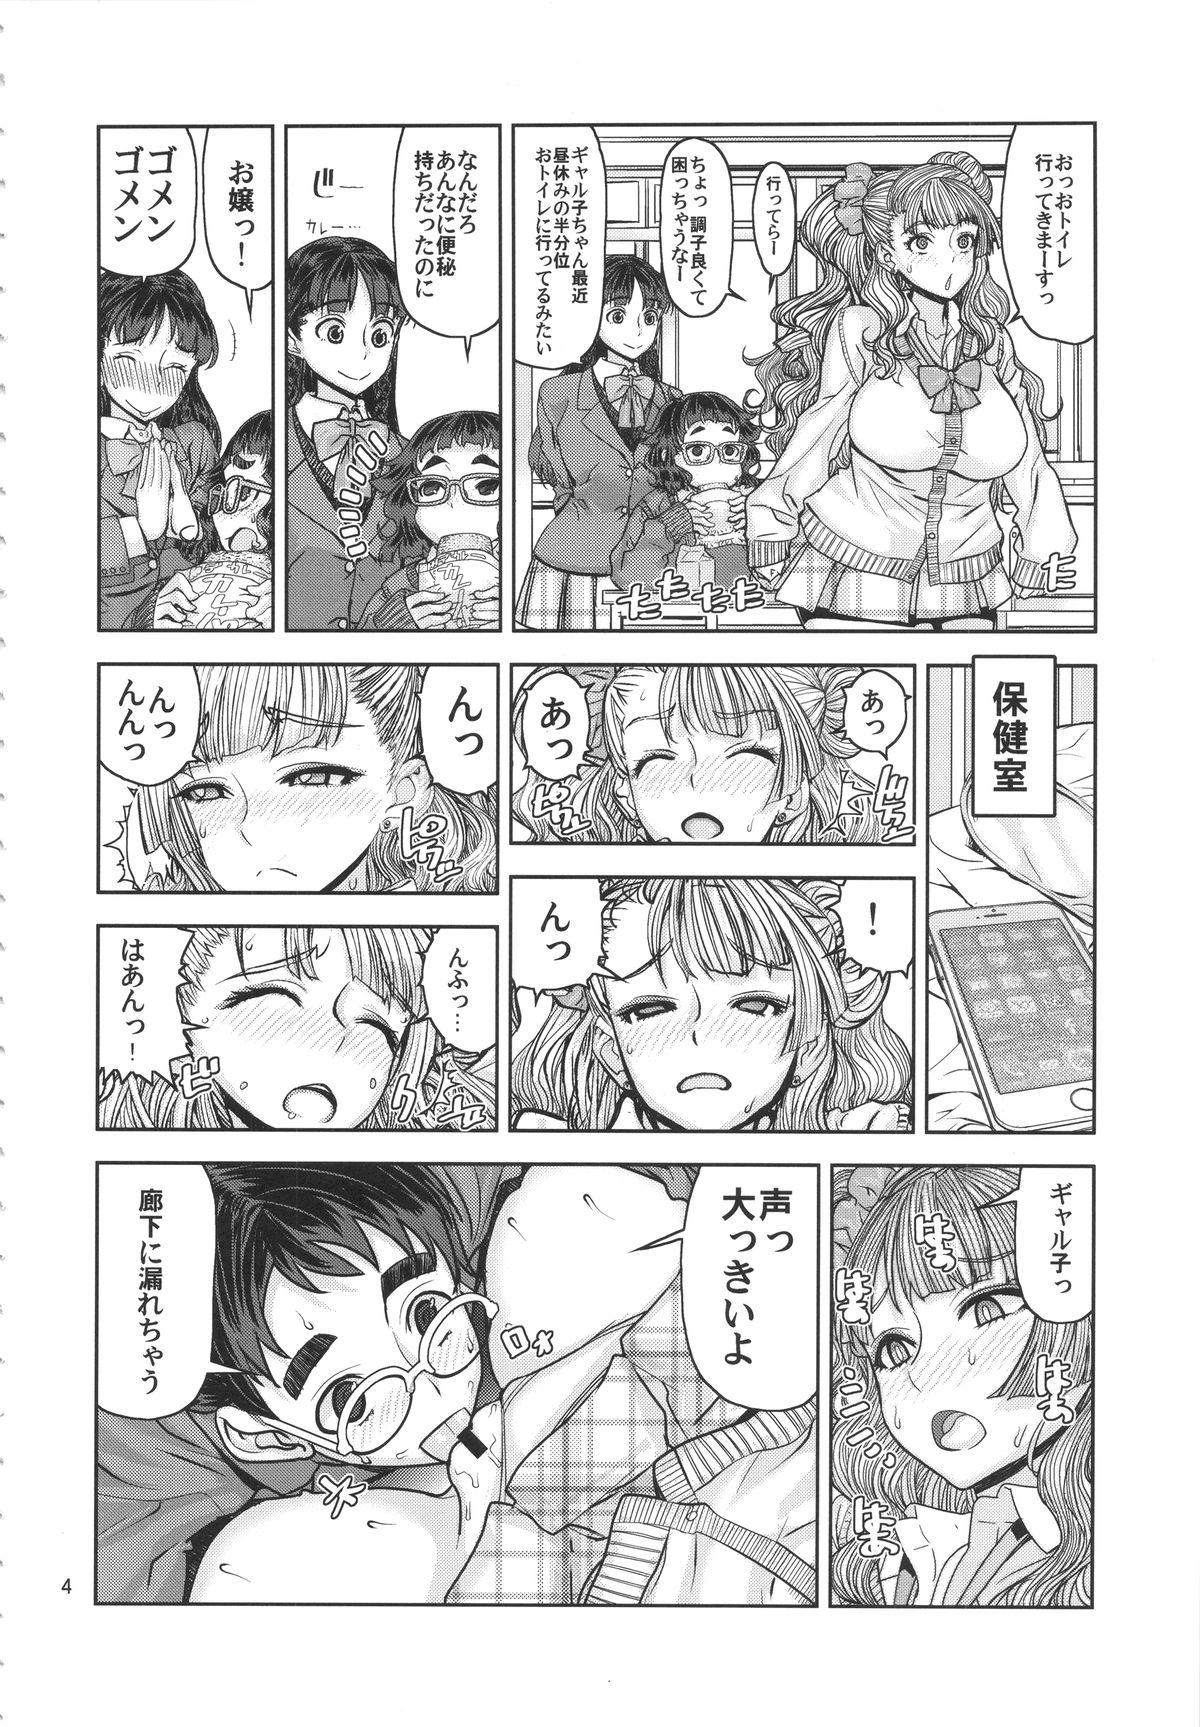 Lesbians Leopard Hon 23 no 2 - Oshiete galko-chan Style - Page 3